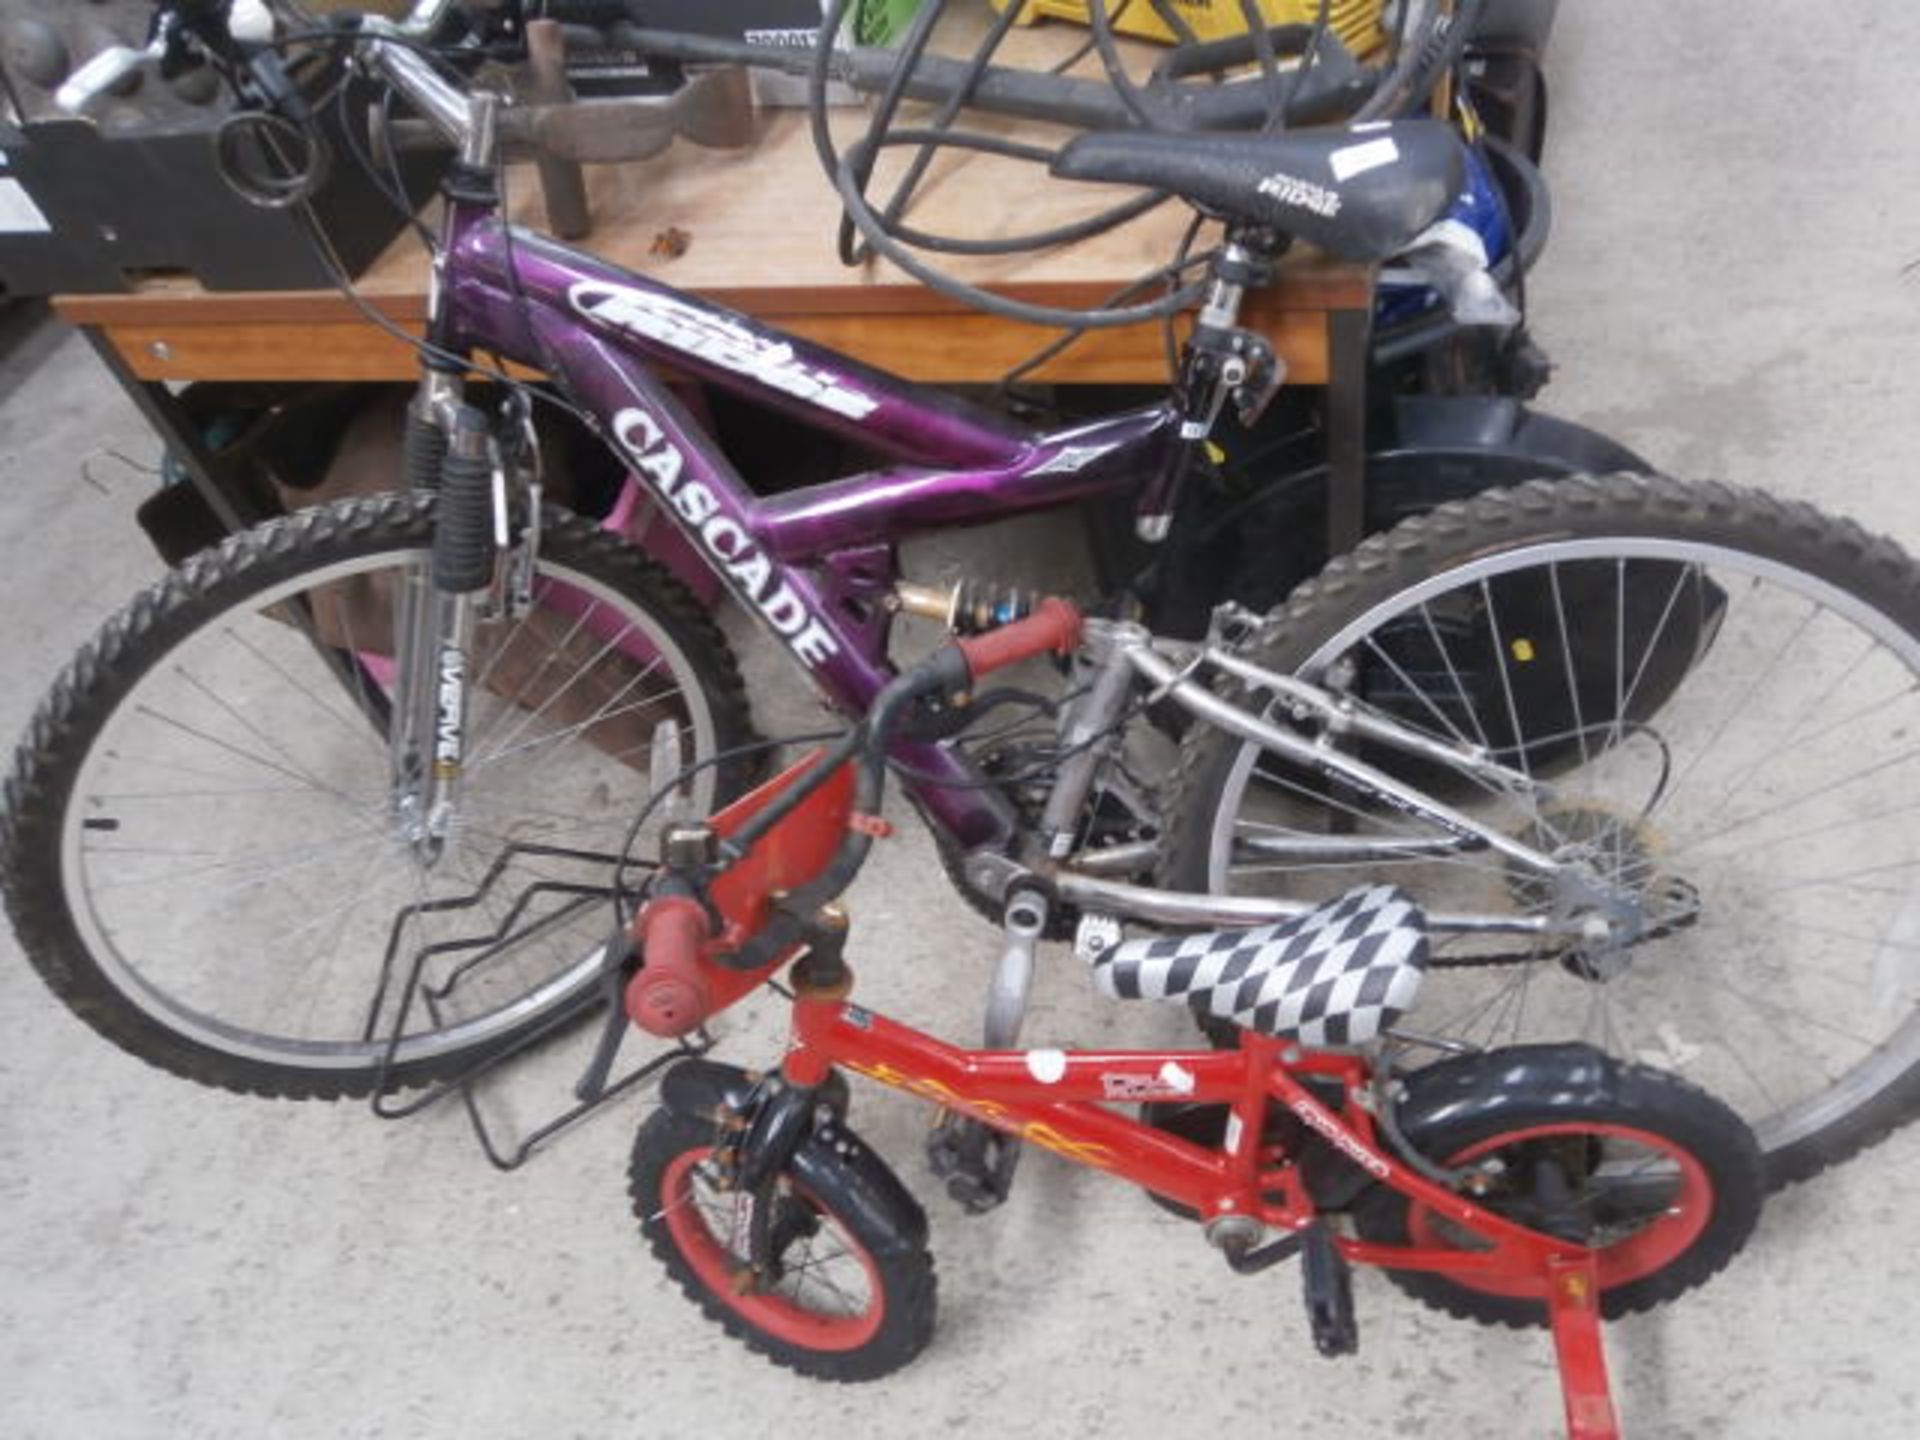 Cascade mountain bike and a Childs bike